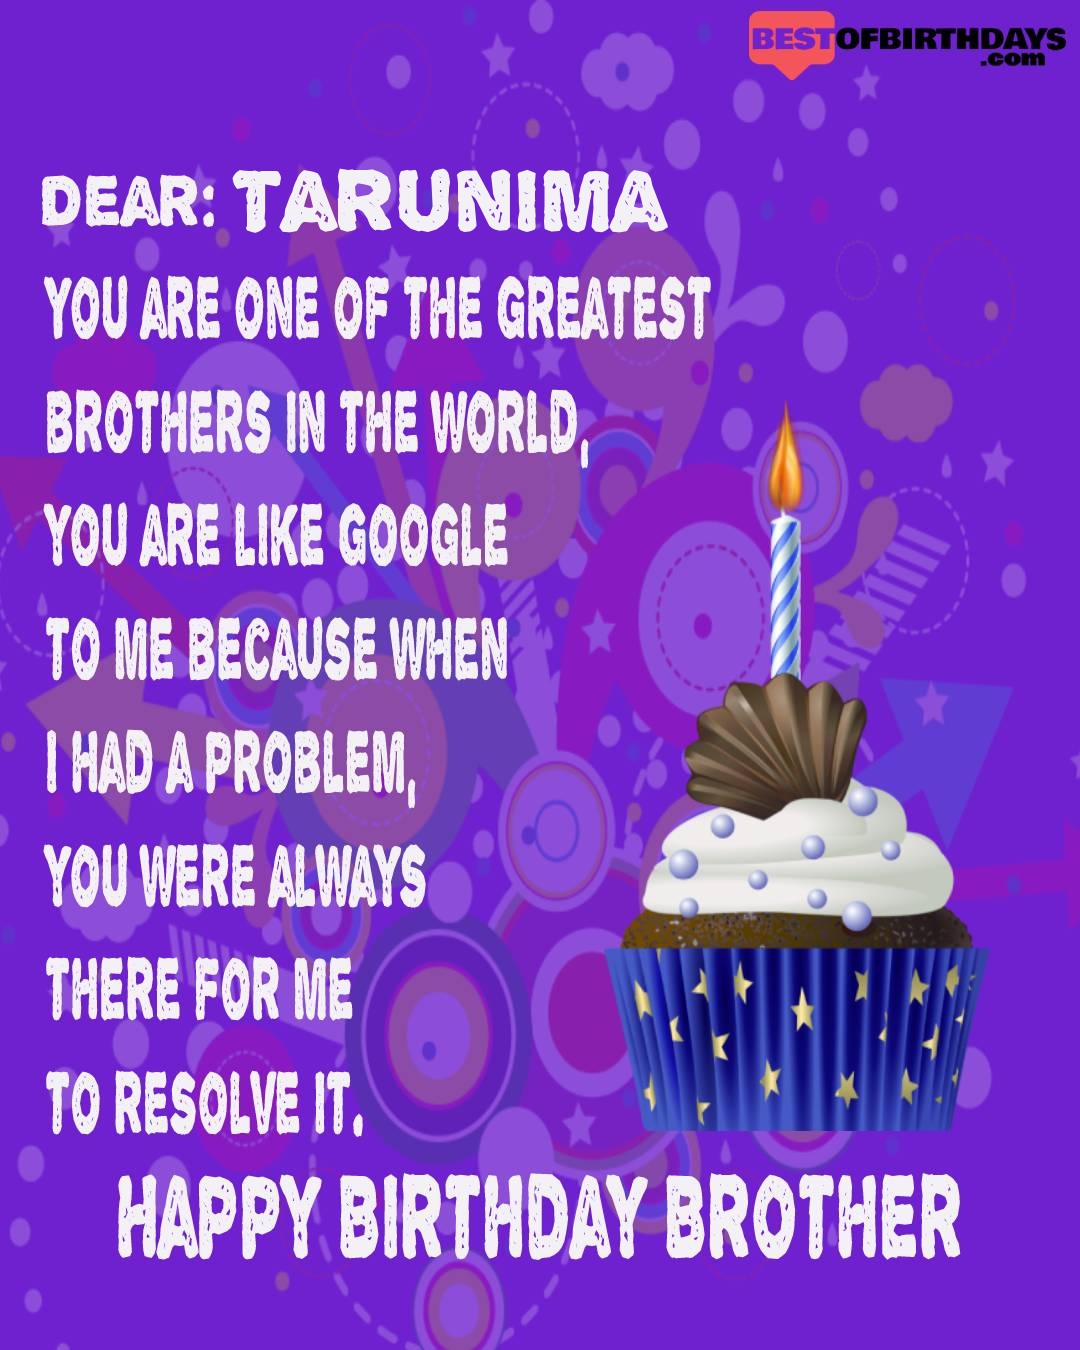 Happy birthday tarunima bhai brother bro